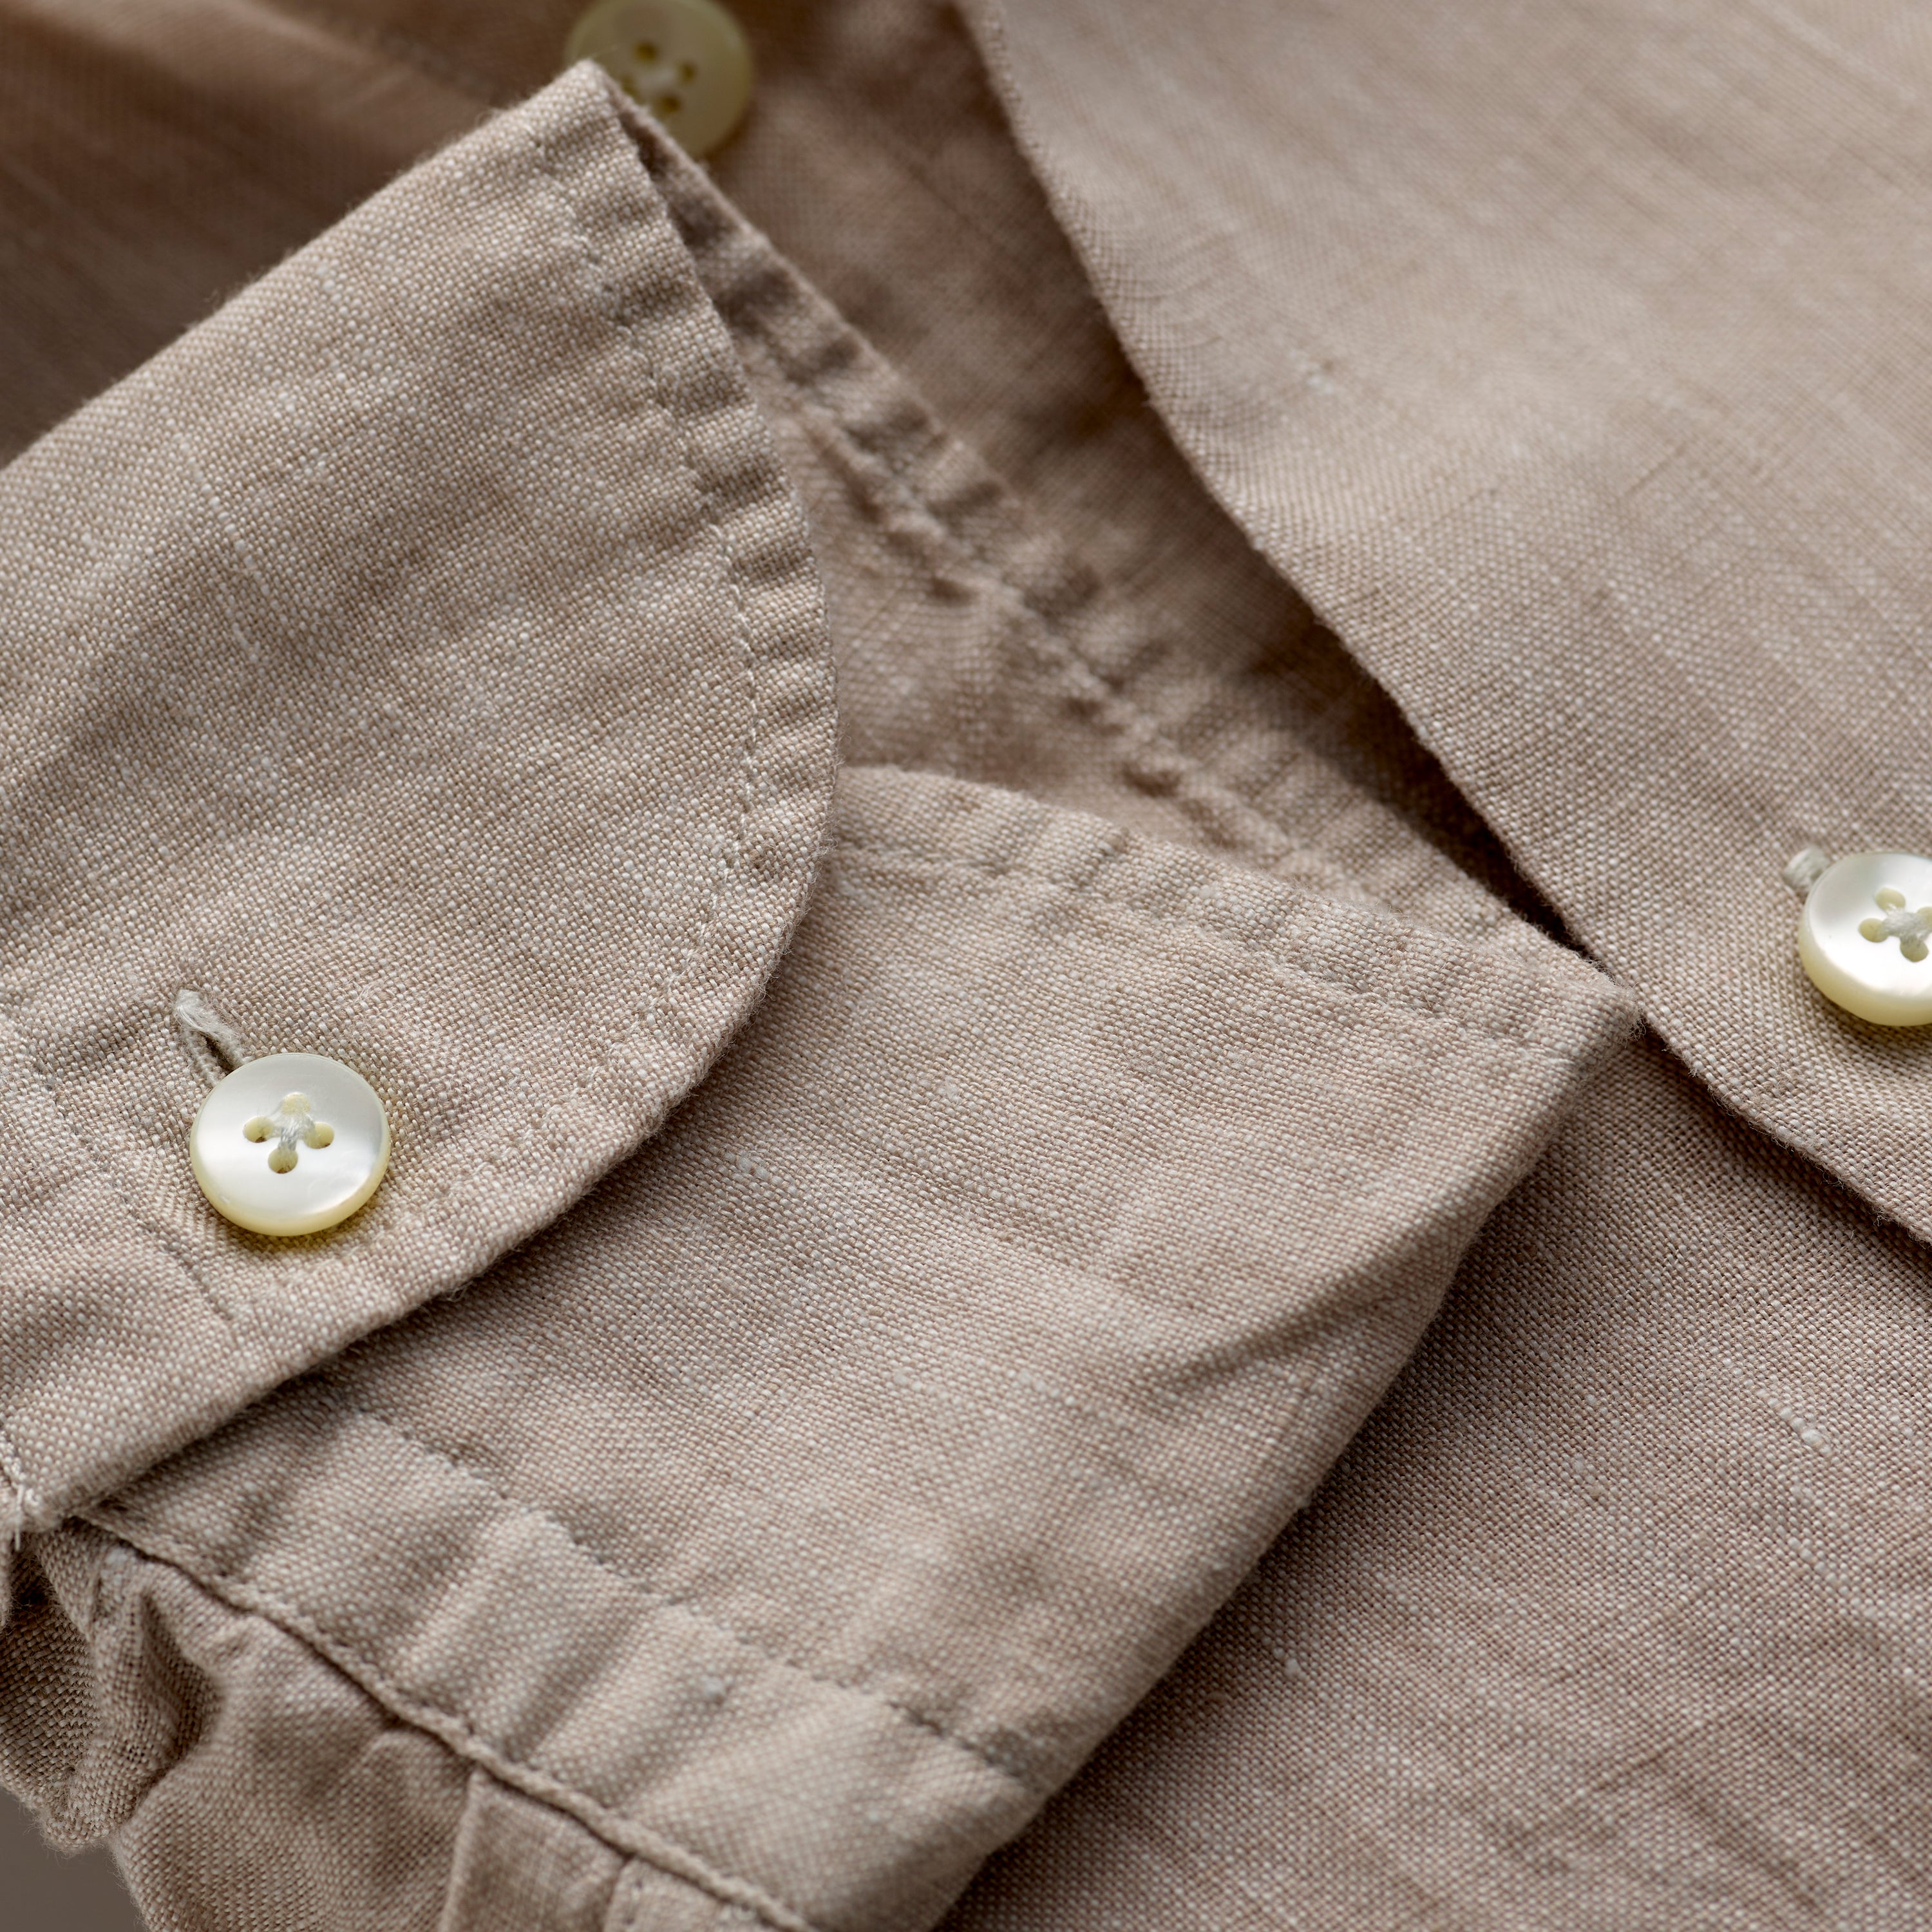 Spread Collar Linen Shirt in Light Beige